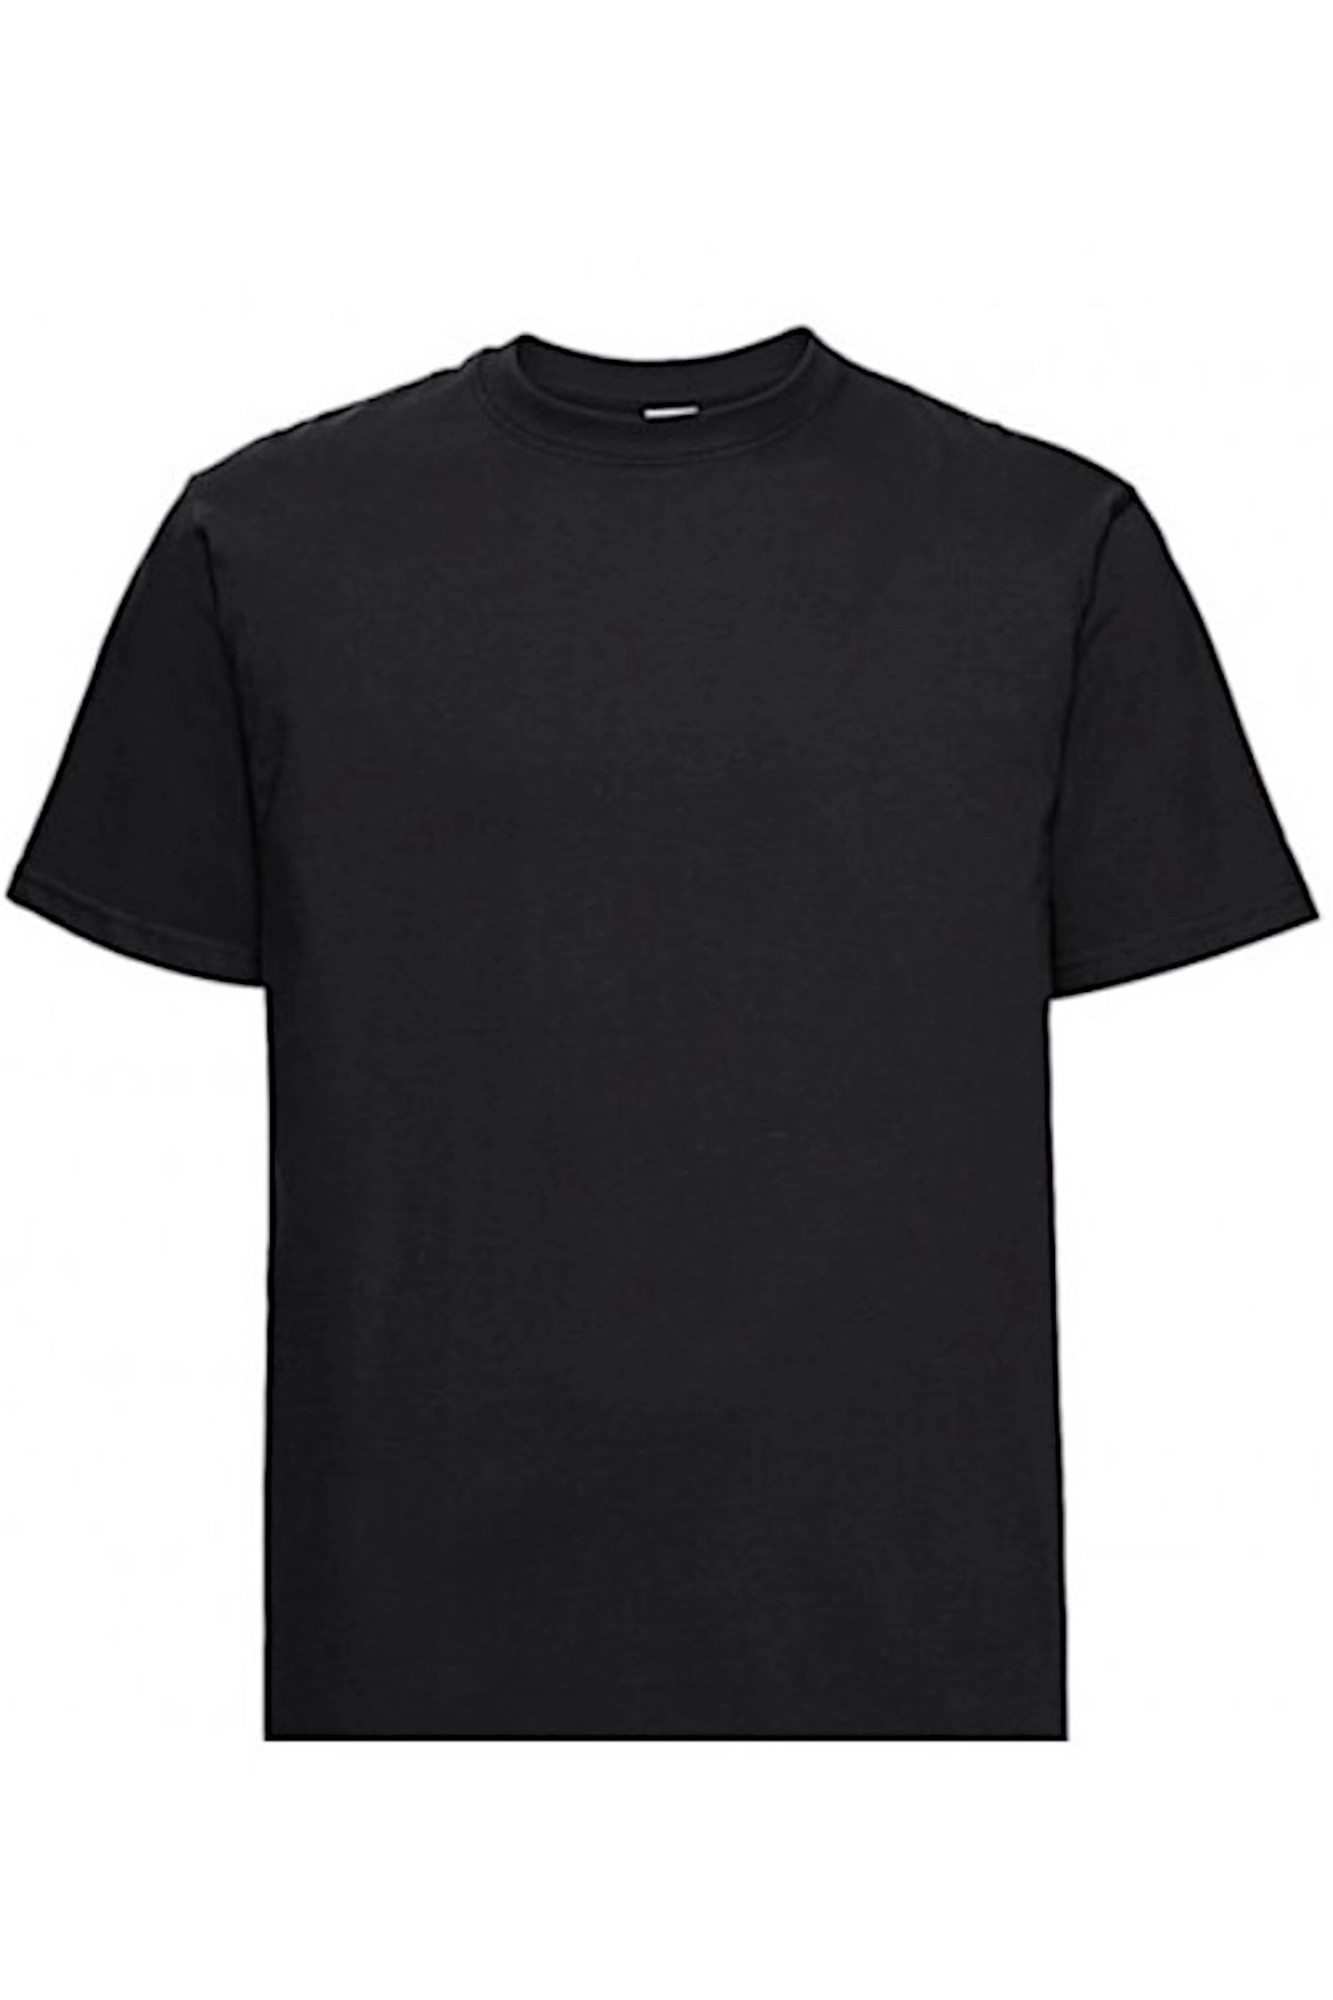 Pánské tričko 002 black - NOVITI černá XXL